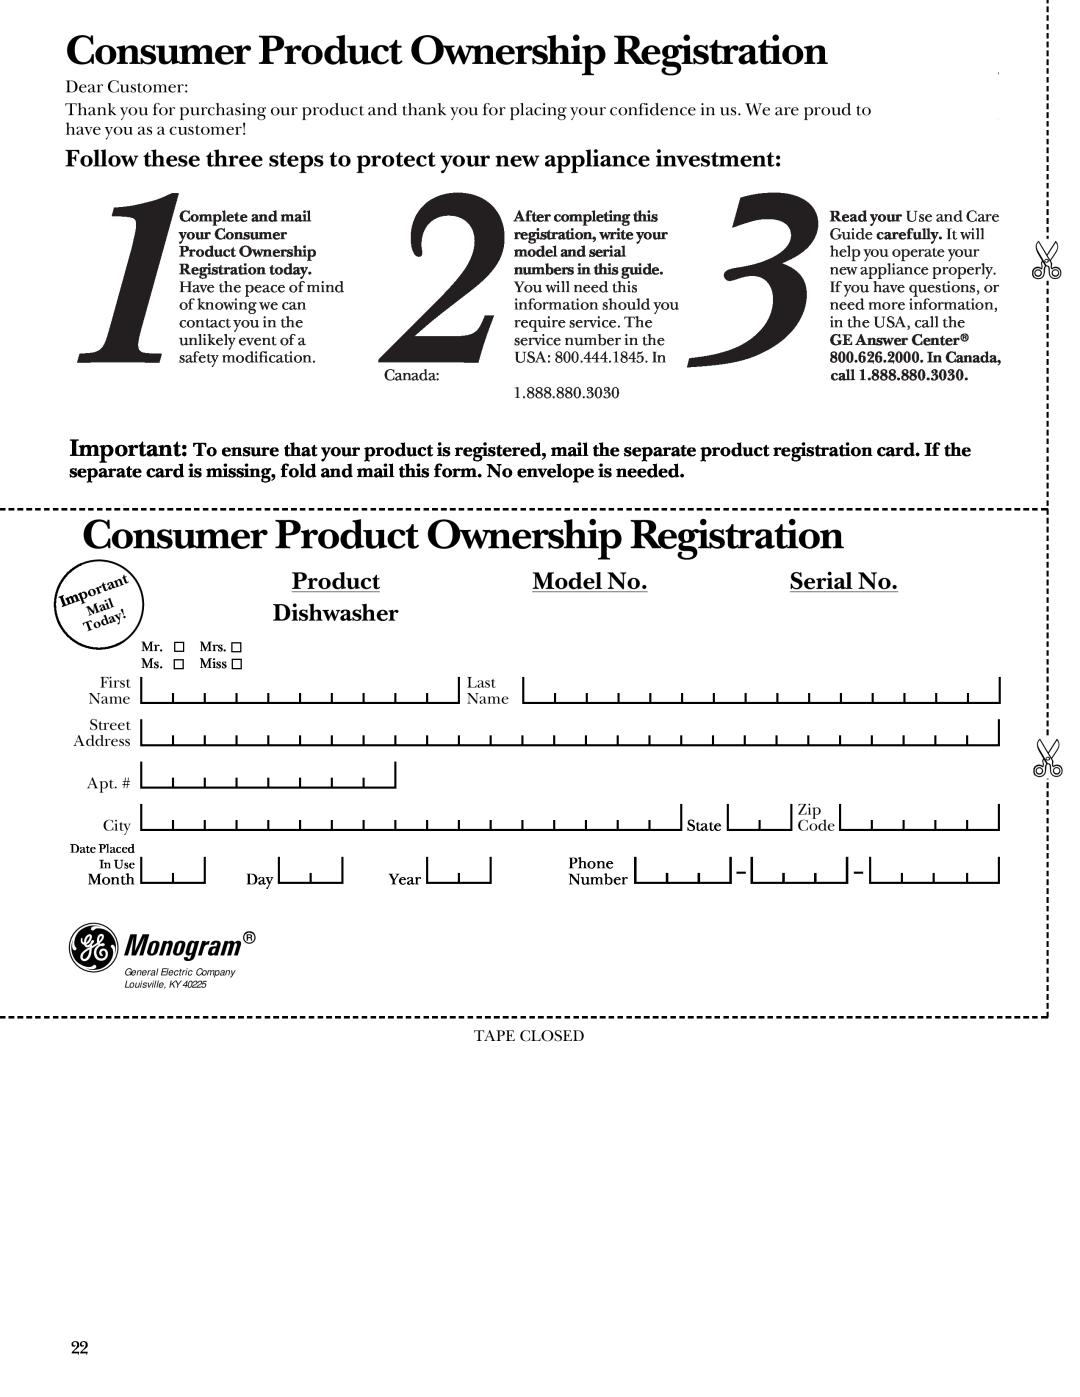 GE ZBD4200, 165D4700P192 manual Consumer Product Ownership Registration, Model No, Serial No, Dishwasher, Monogram 